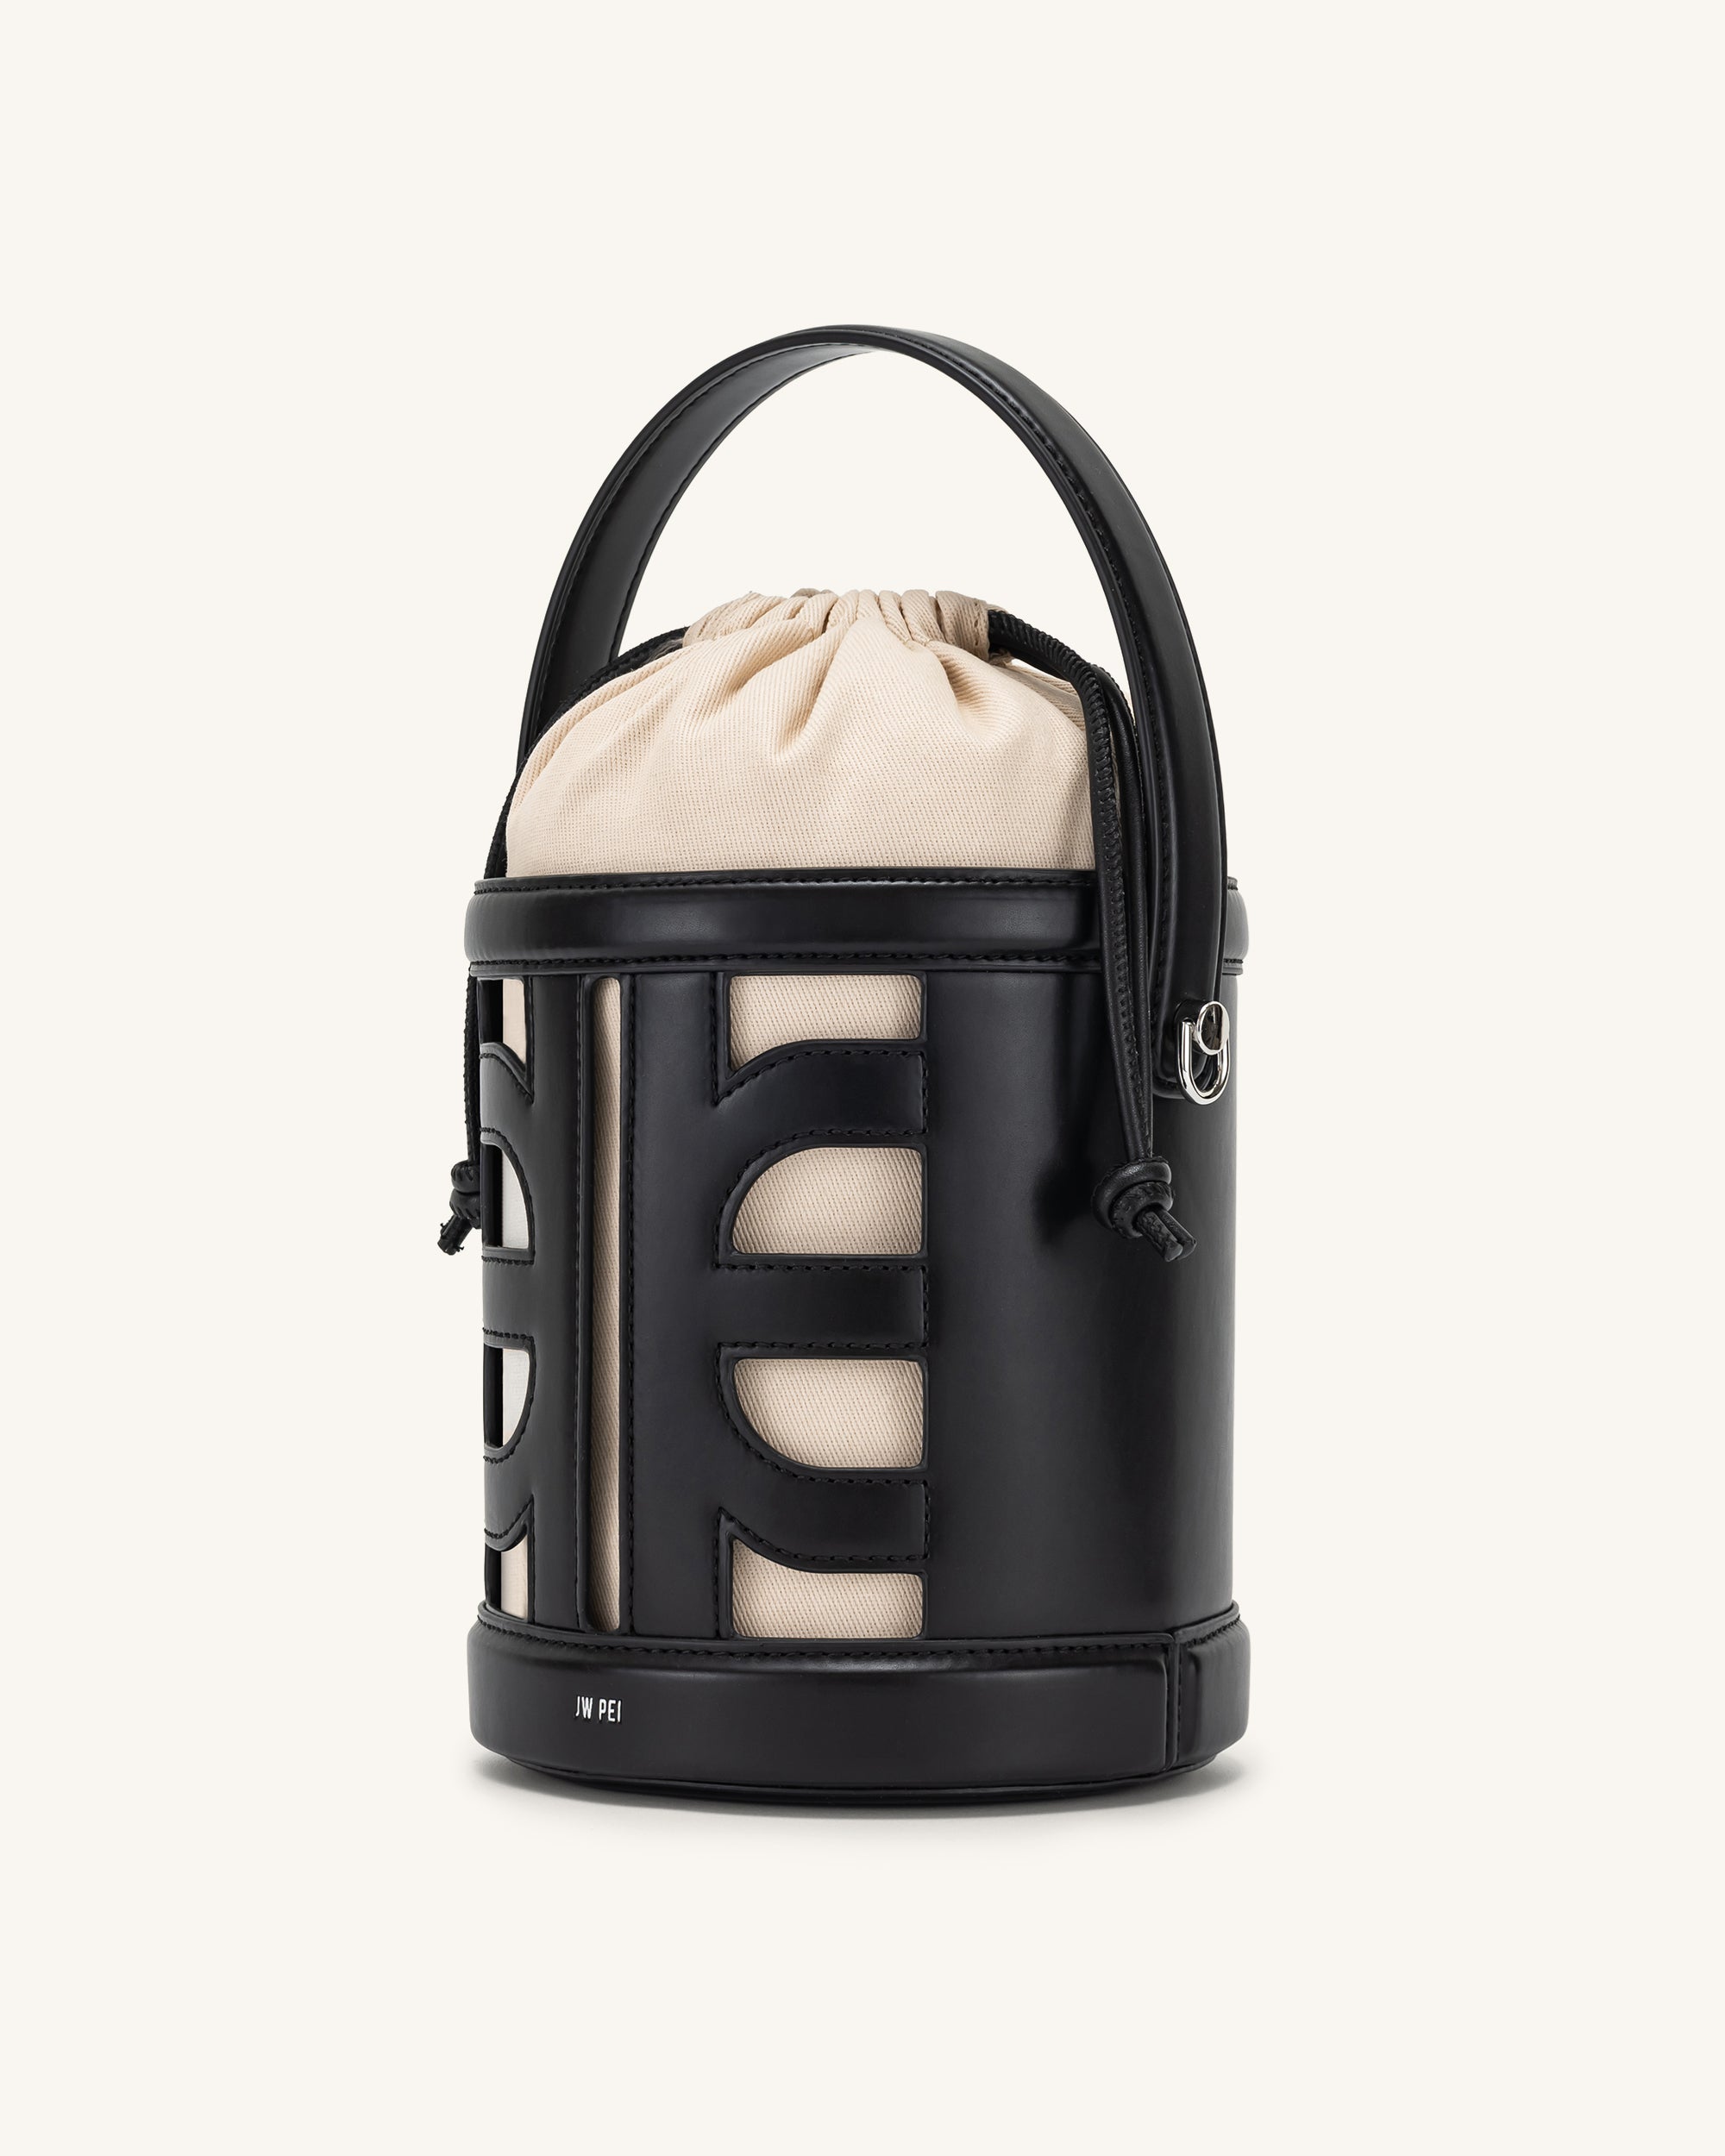 FEI Leather Cutout Bucket Bag - Black - JW PEI